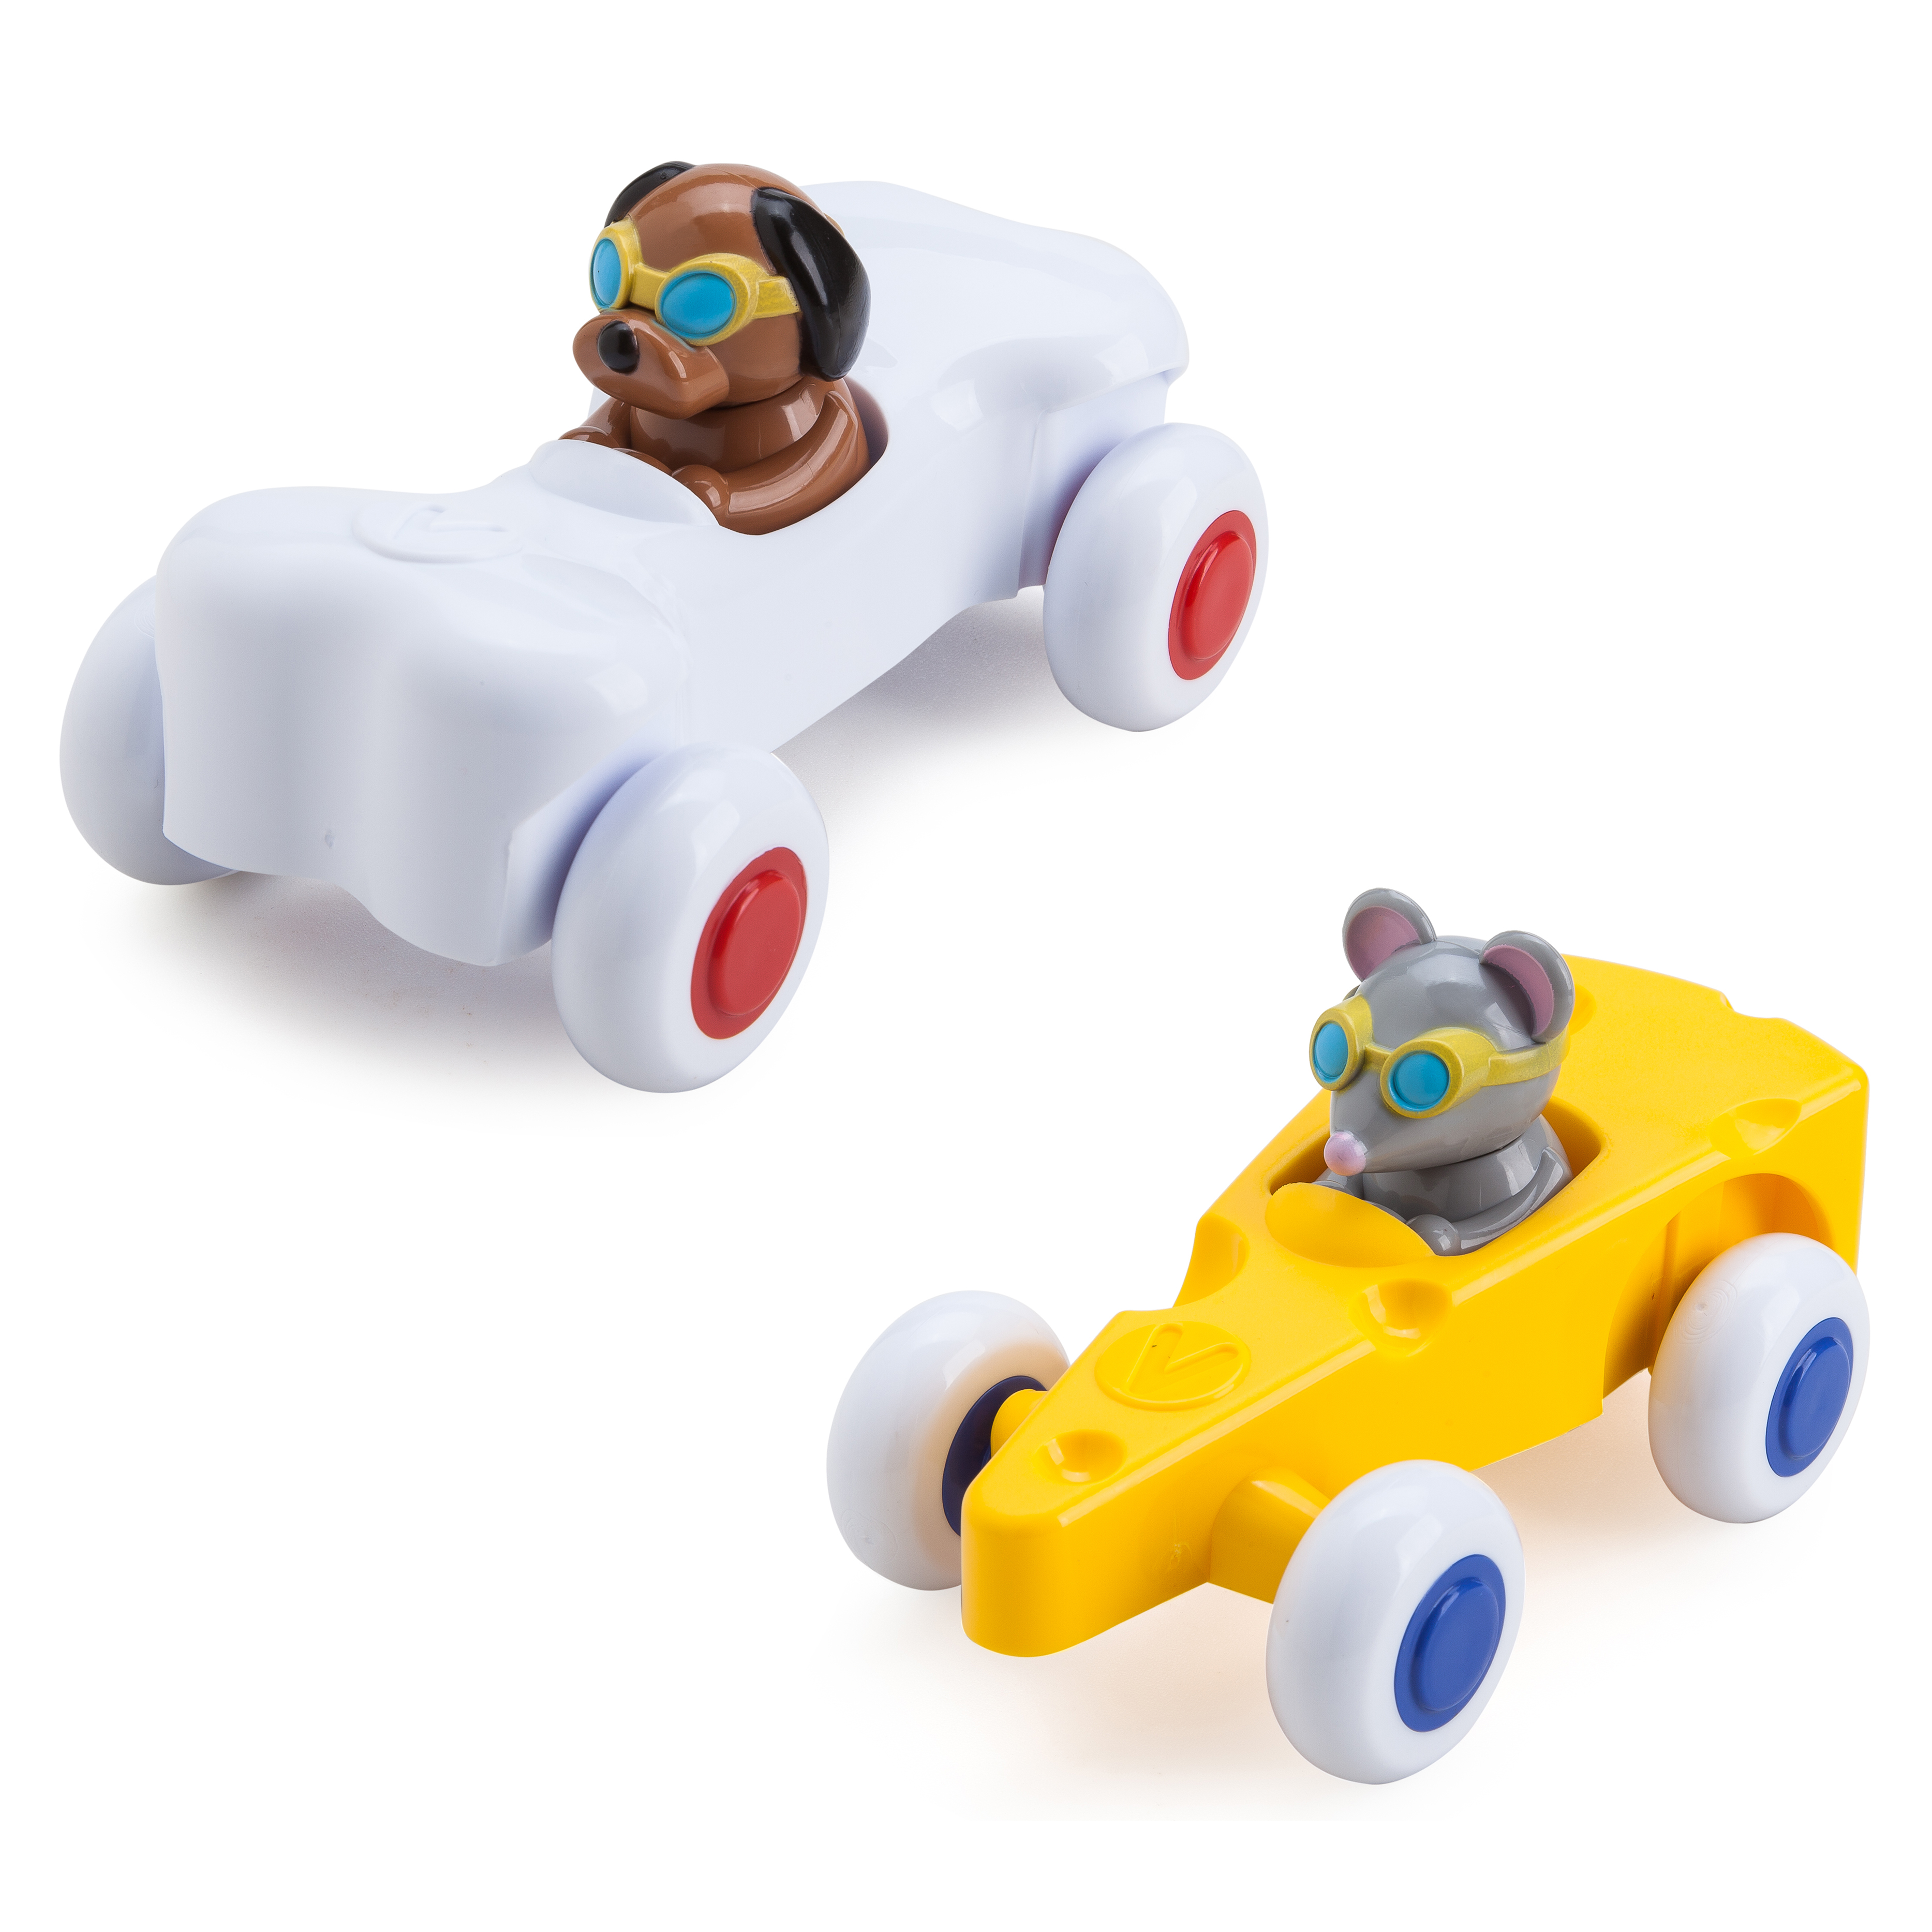 Cute Racer Duo set